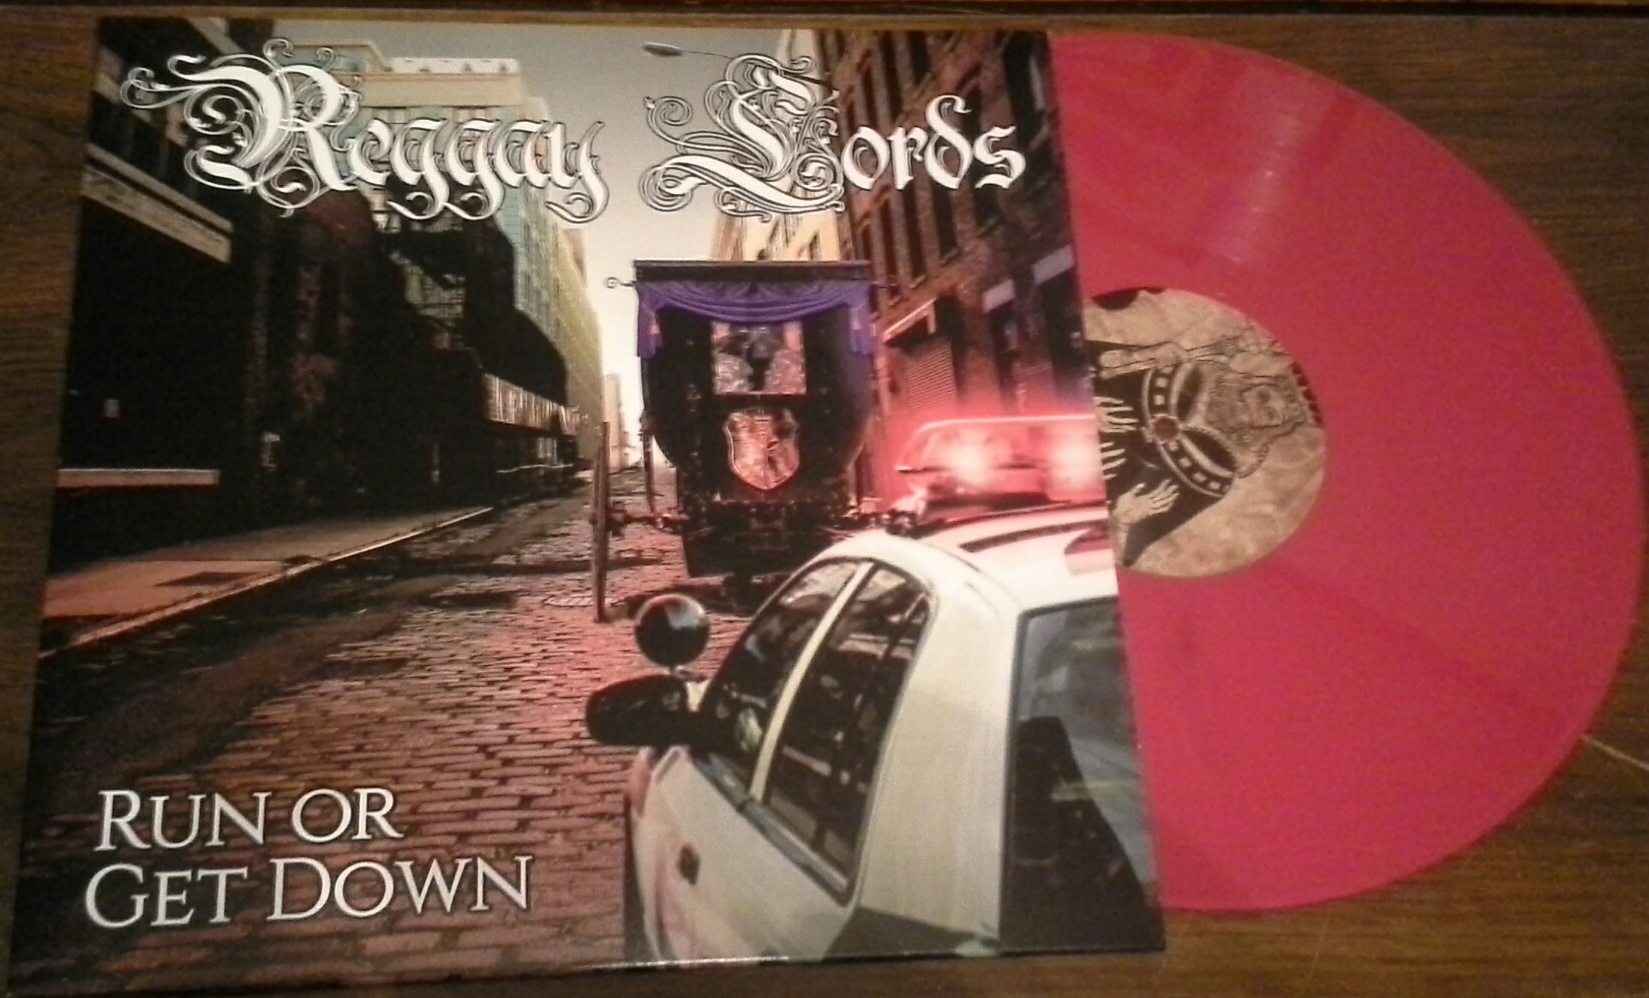 Reggay Lords/RUN OR GET DOWN (PURPLE) LP